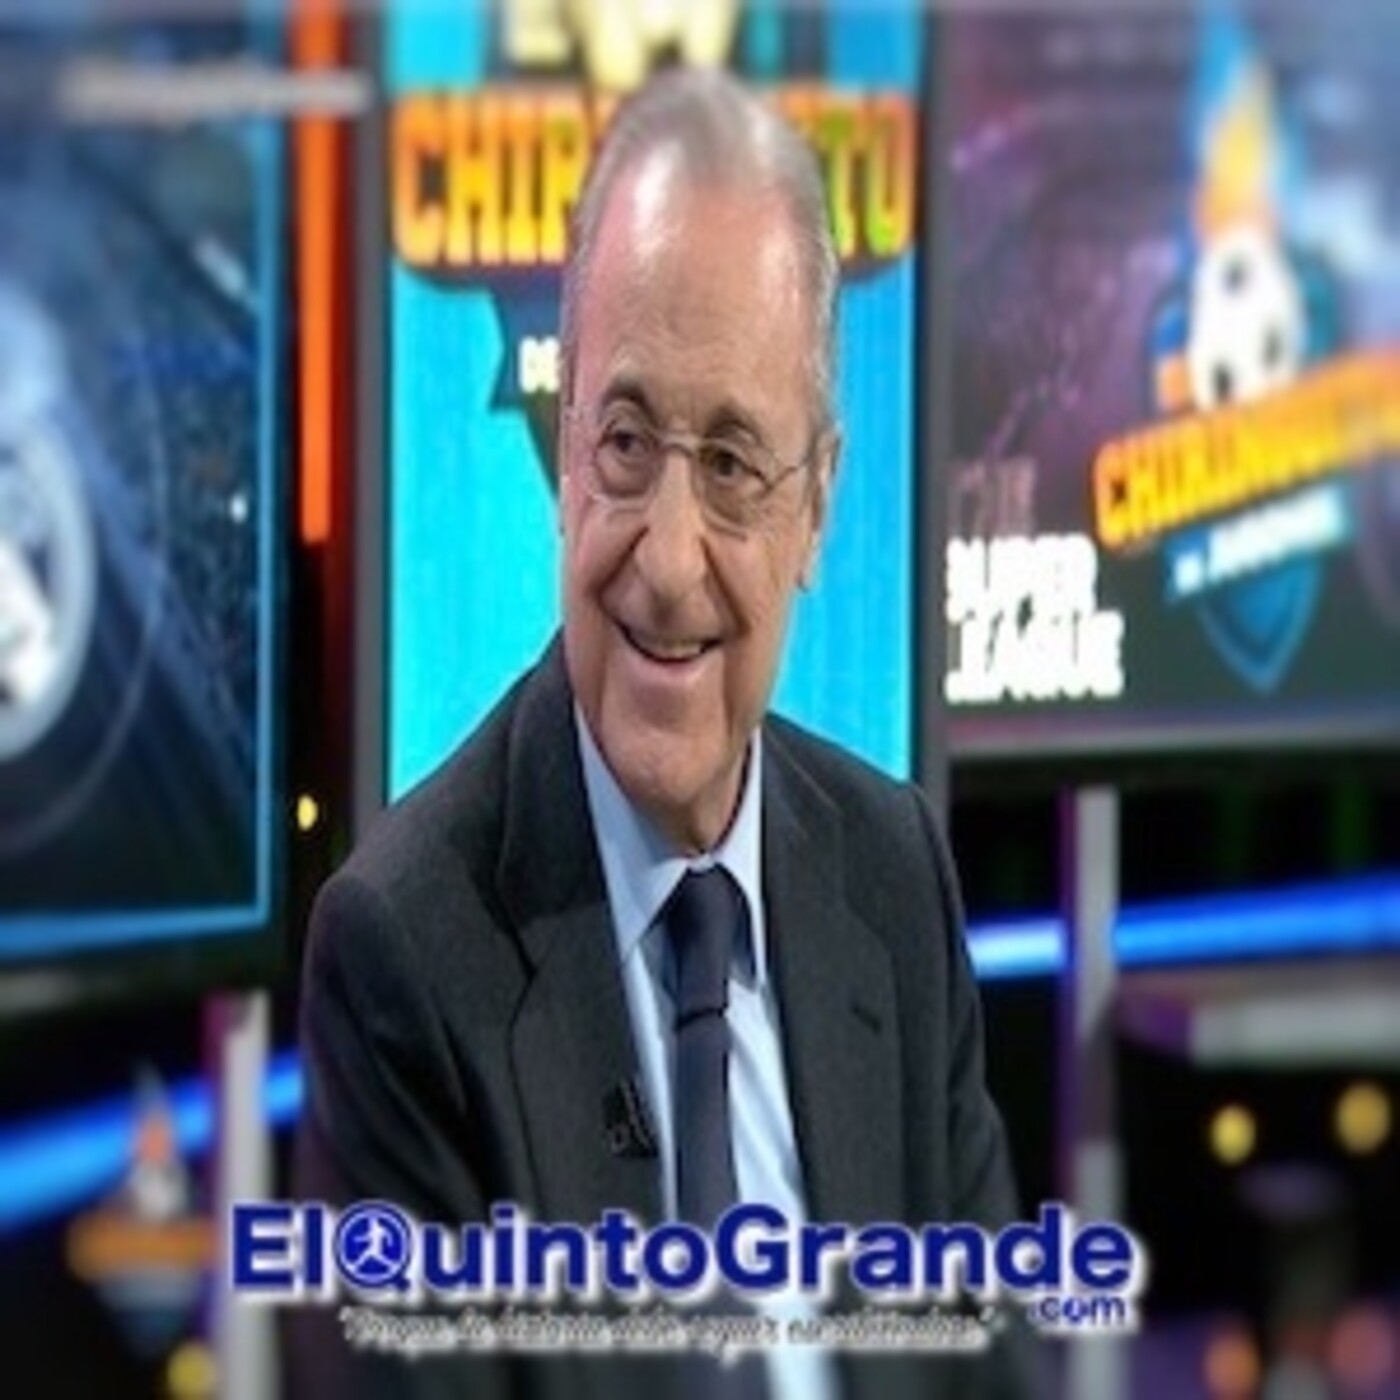 Entrevista a Florentino Pérez presidente de La SuperLiga